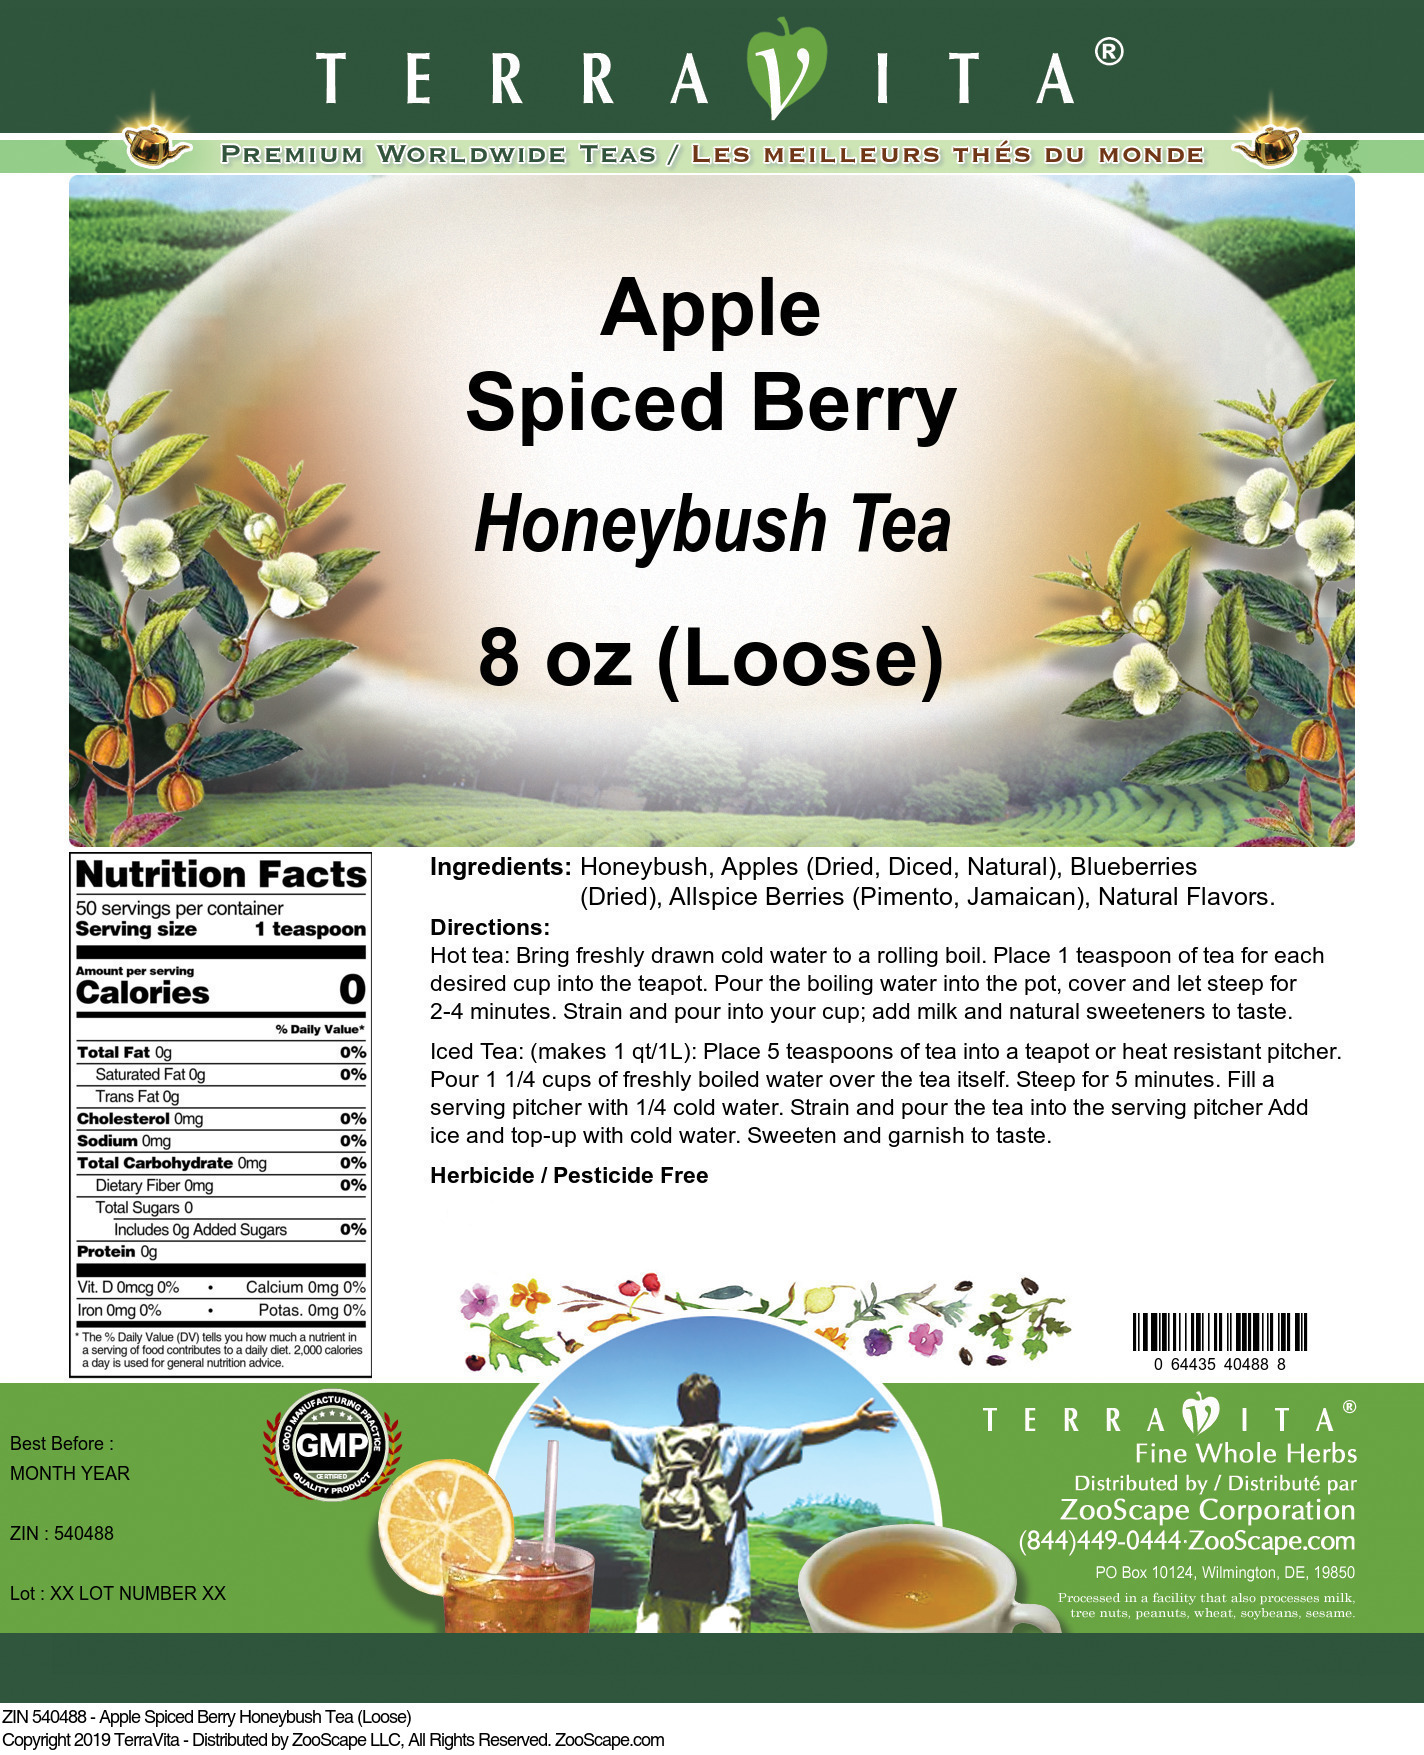 Apple Spiced Berry Honeybush Tea (Loose) - Label